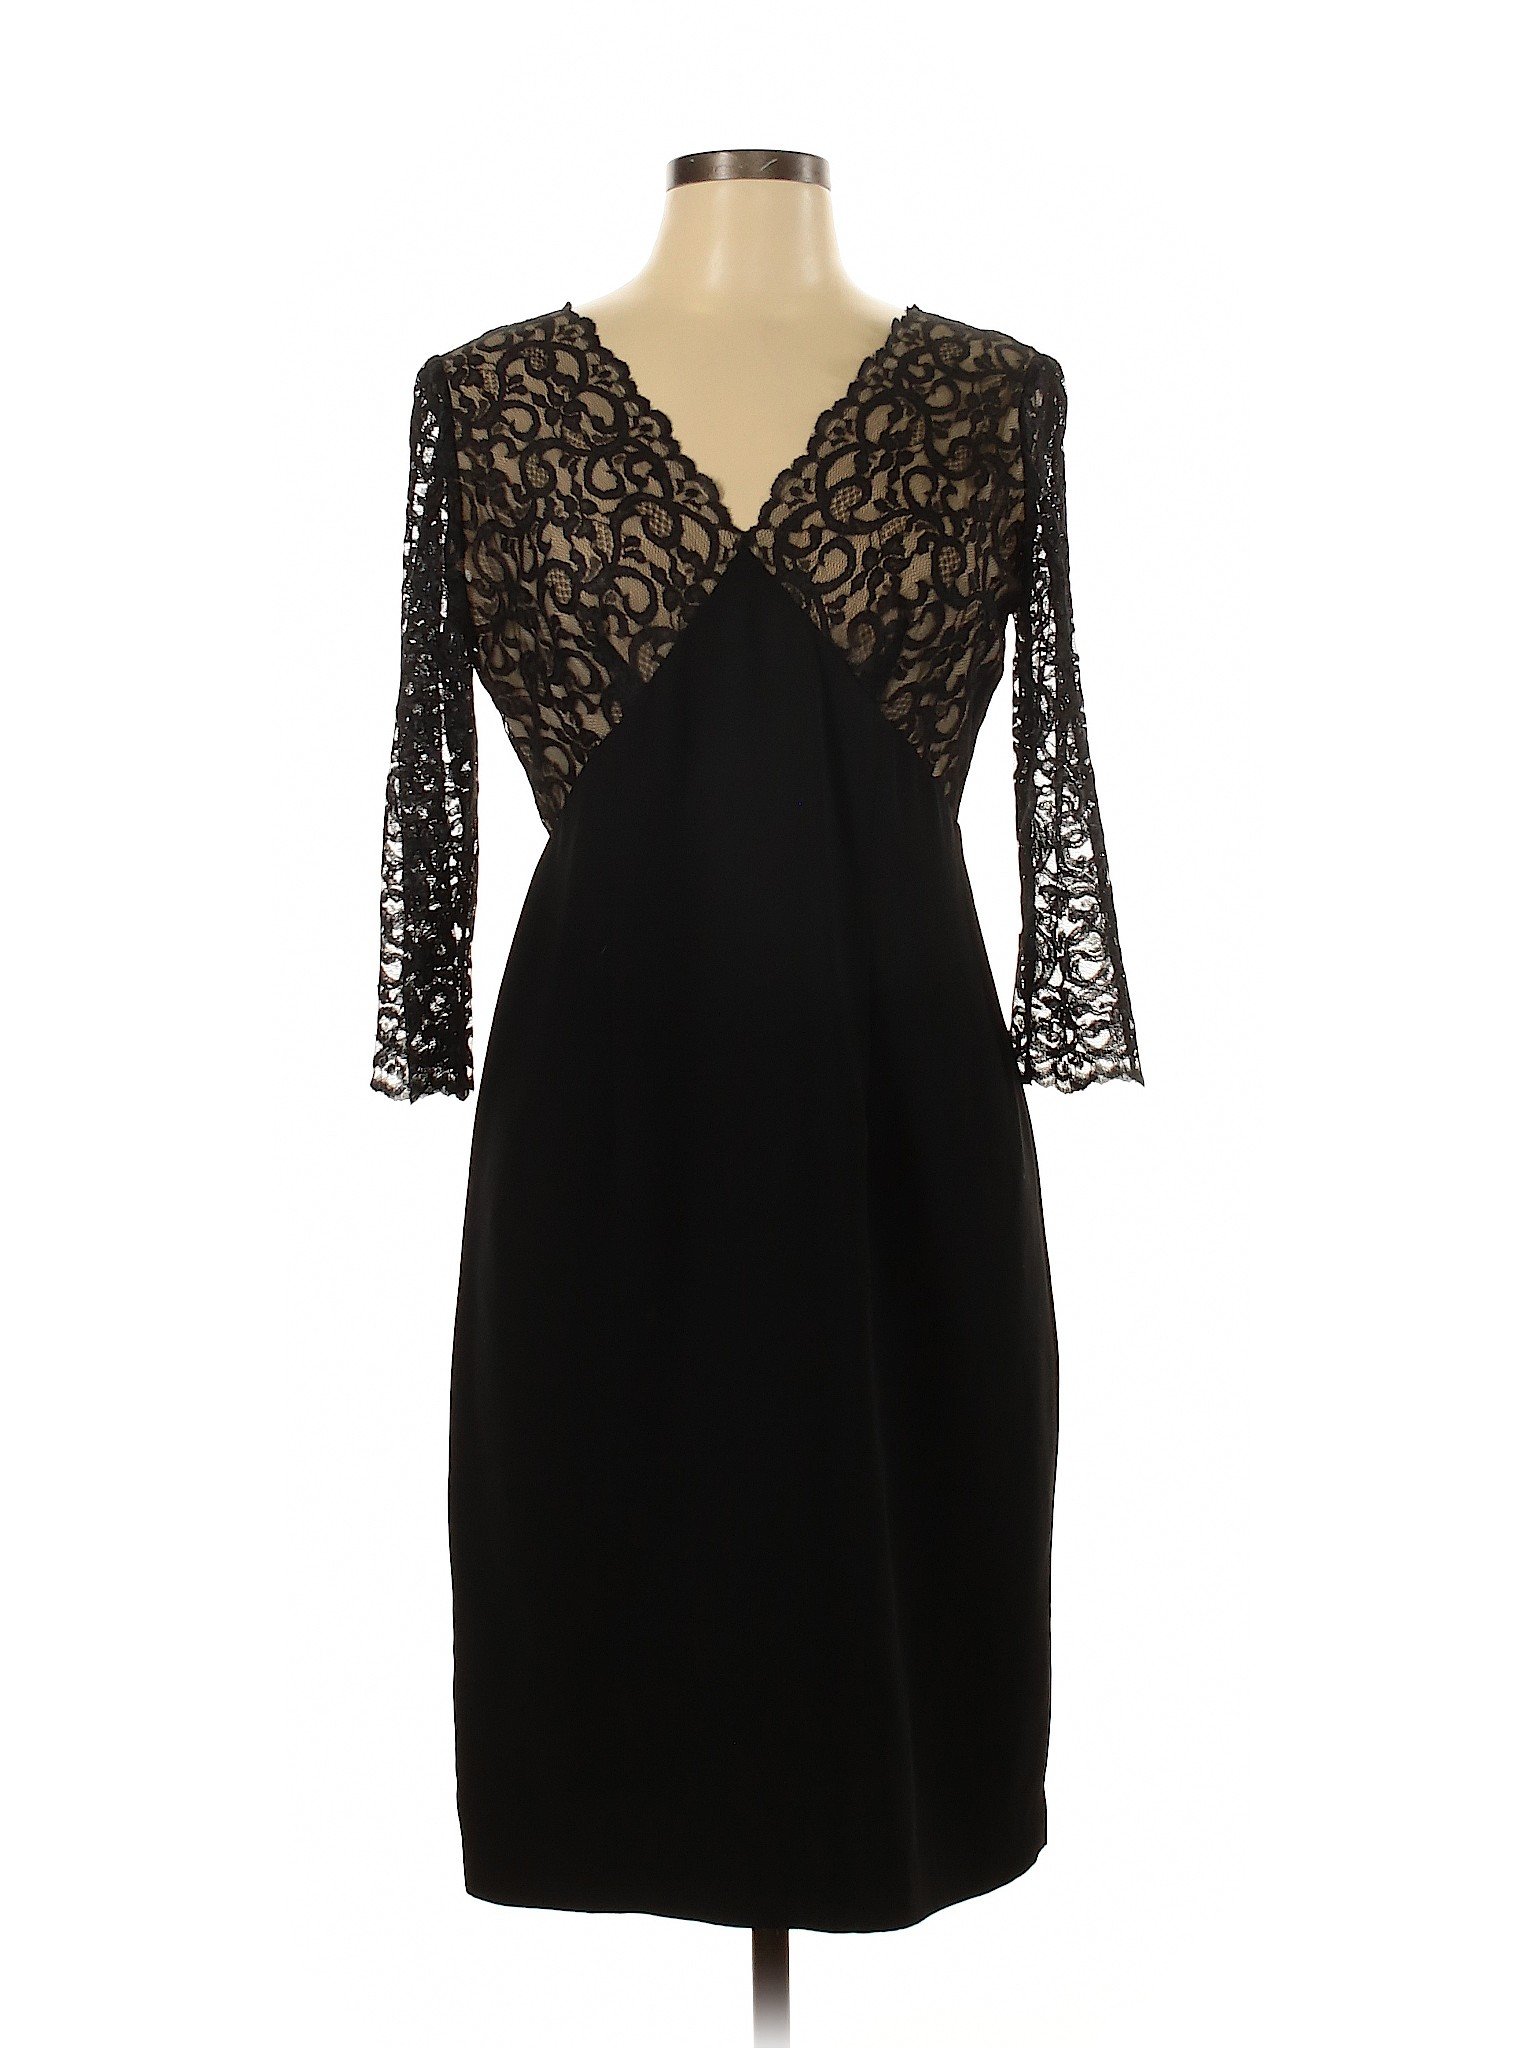 Maggy London Women Black Cocktail Dress 10 | eBay